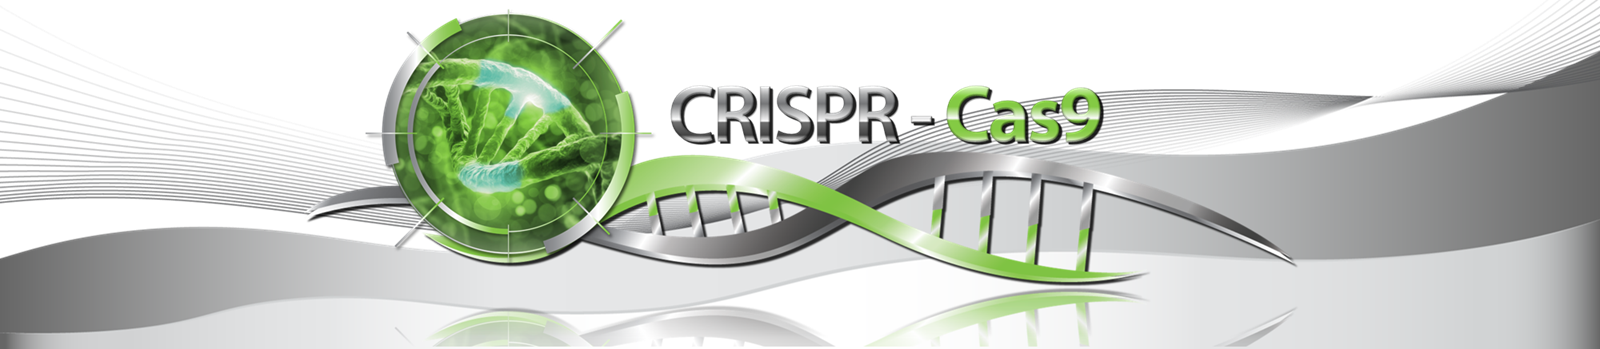 CRISPR - Cas9